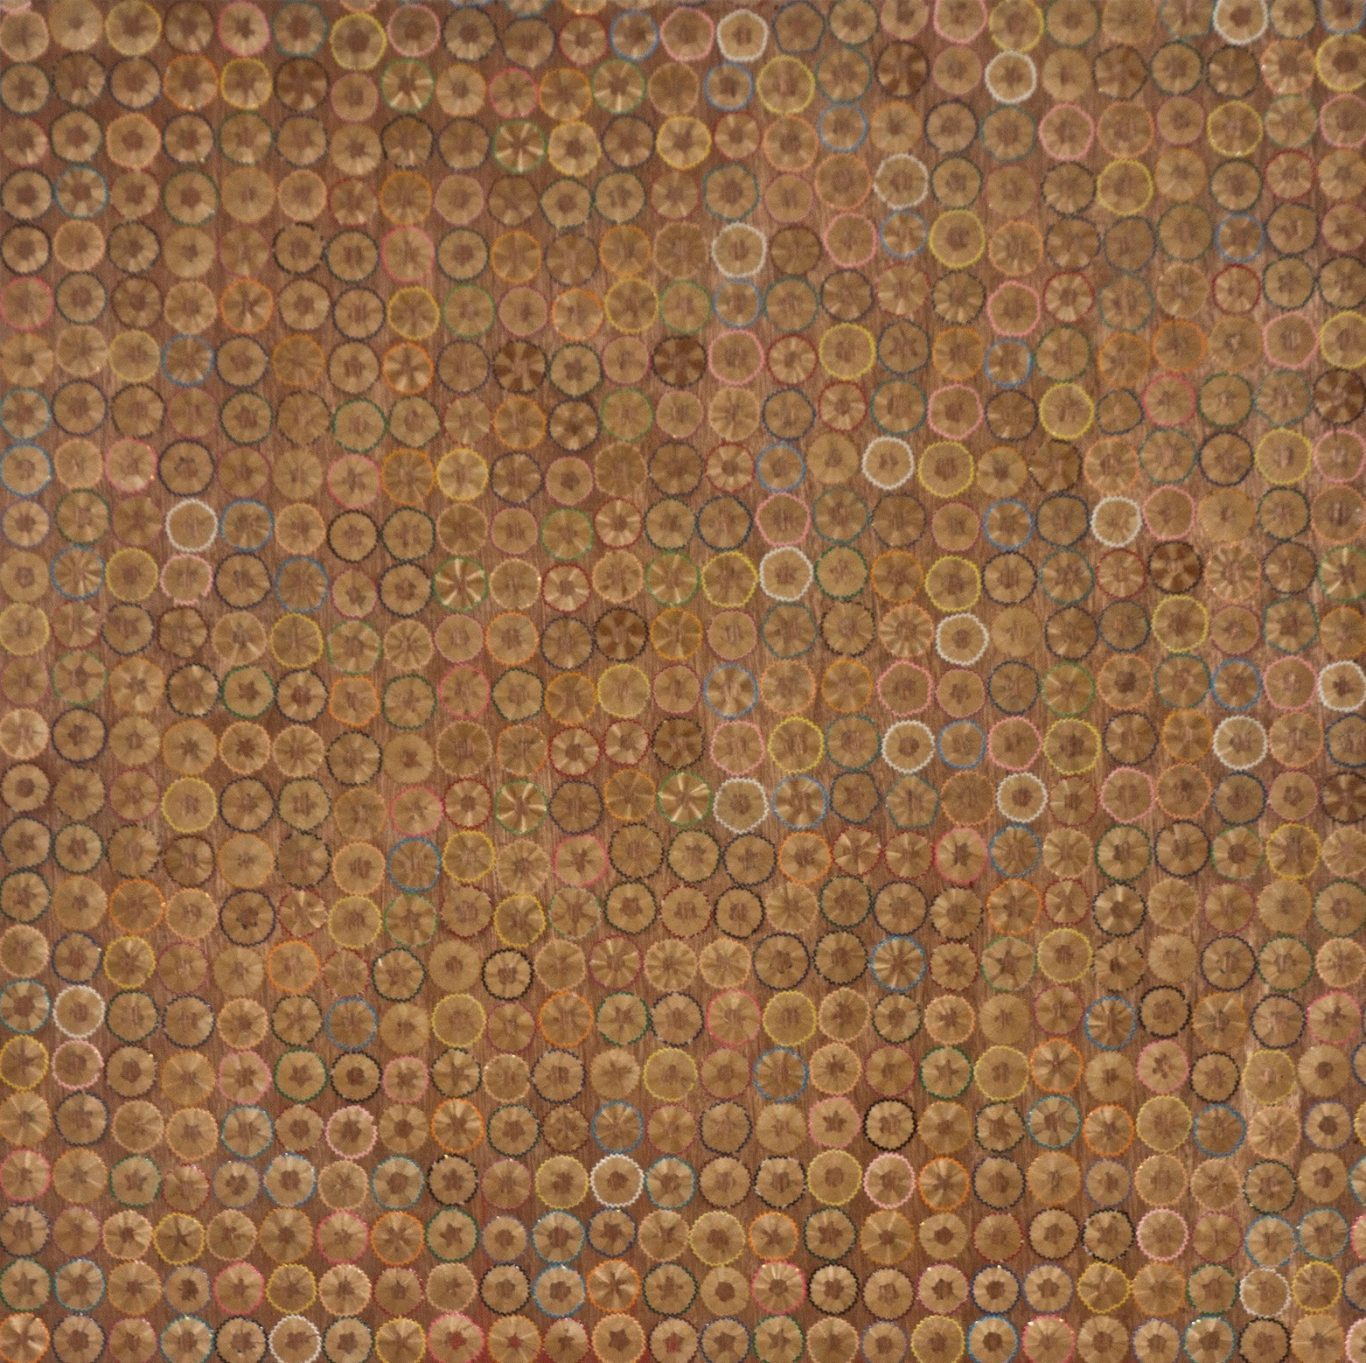 Diana Fonseca. S/t, 2013, de la serie “Terapia en un campo de girasoles”. Madera de lápiz pegada con aglutinante sobre soporte de madera, 120 x 80 cm.
